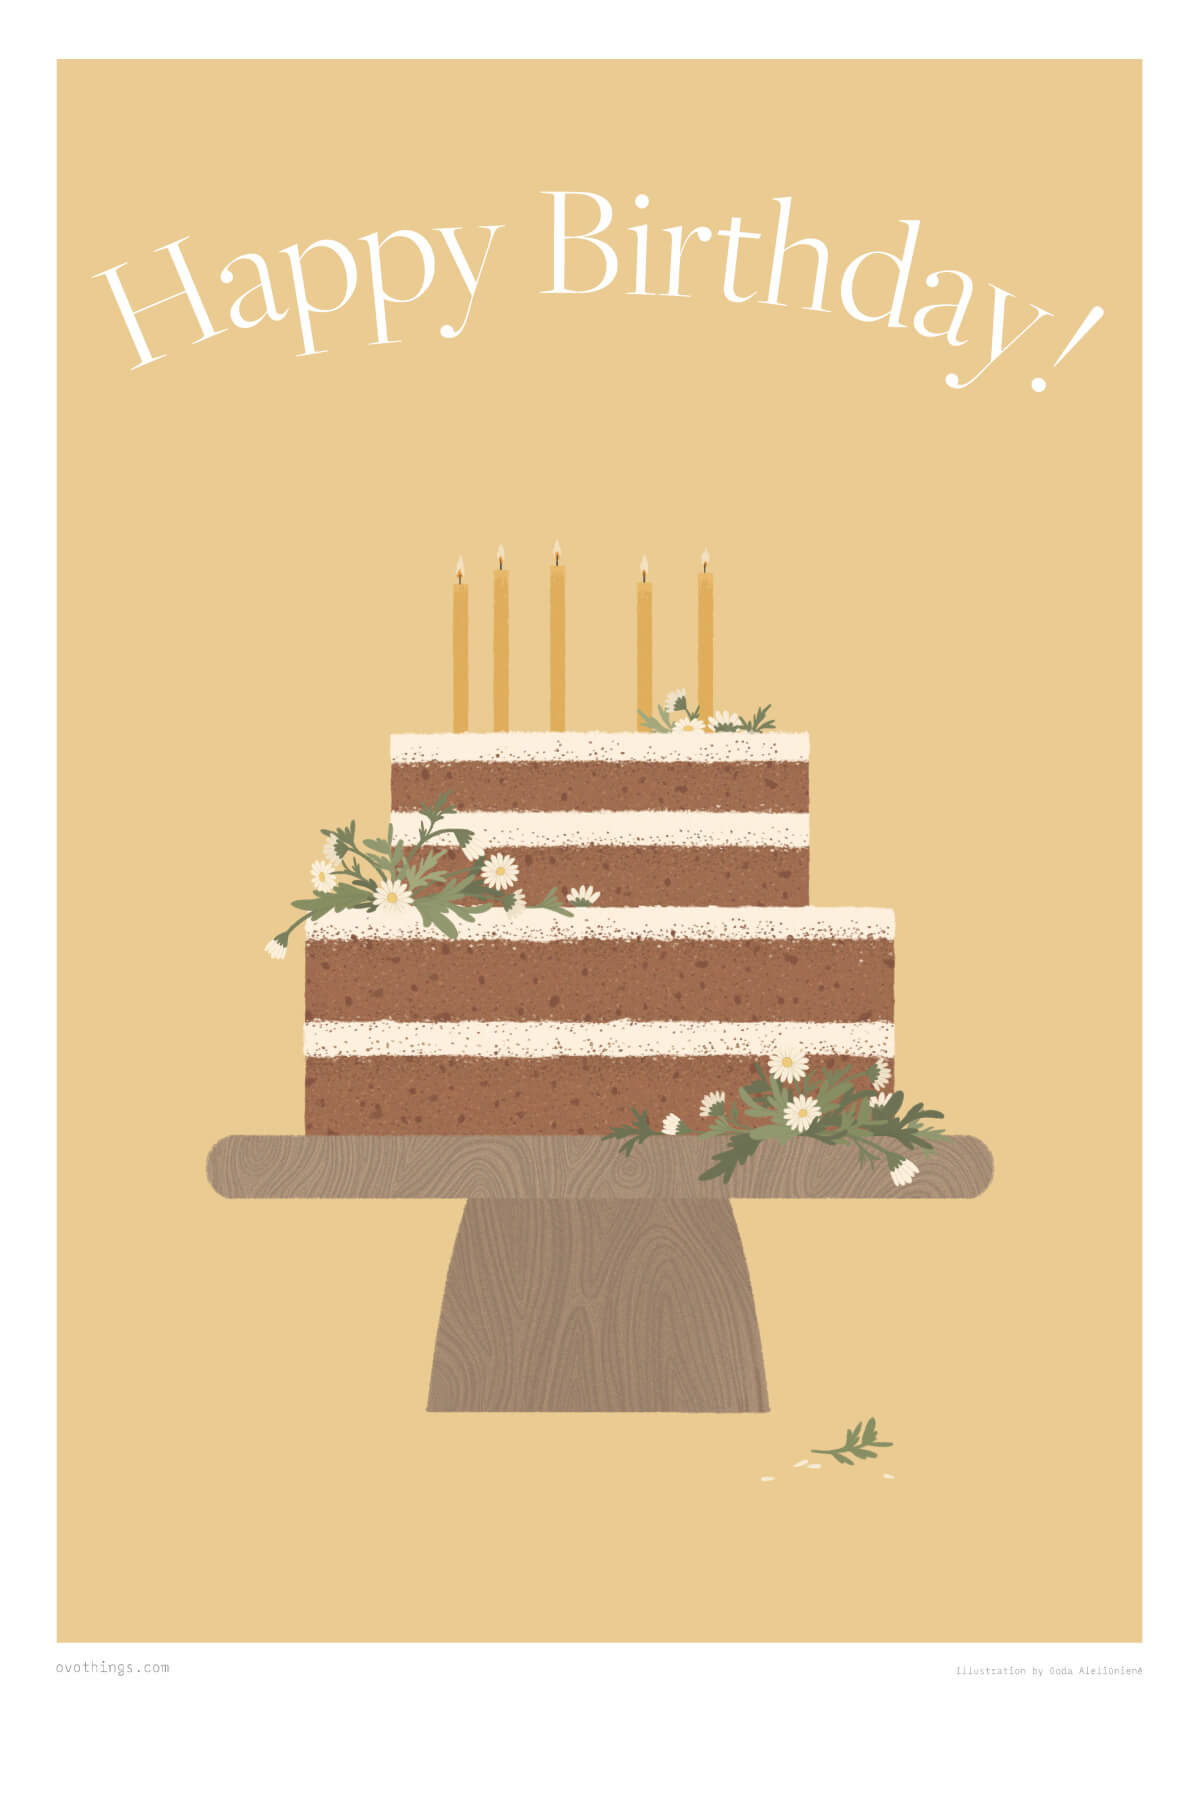 Happy Birthday Cake Poster